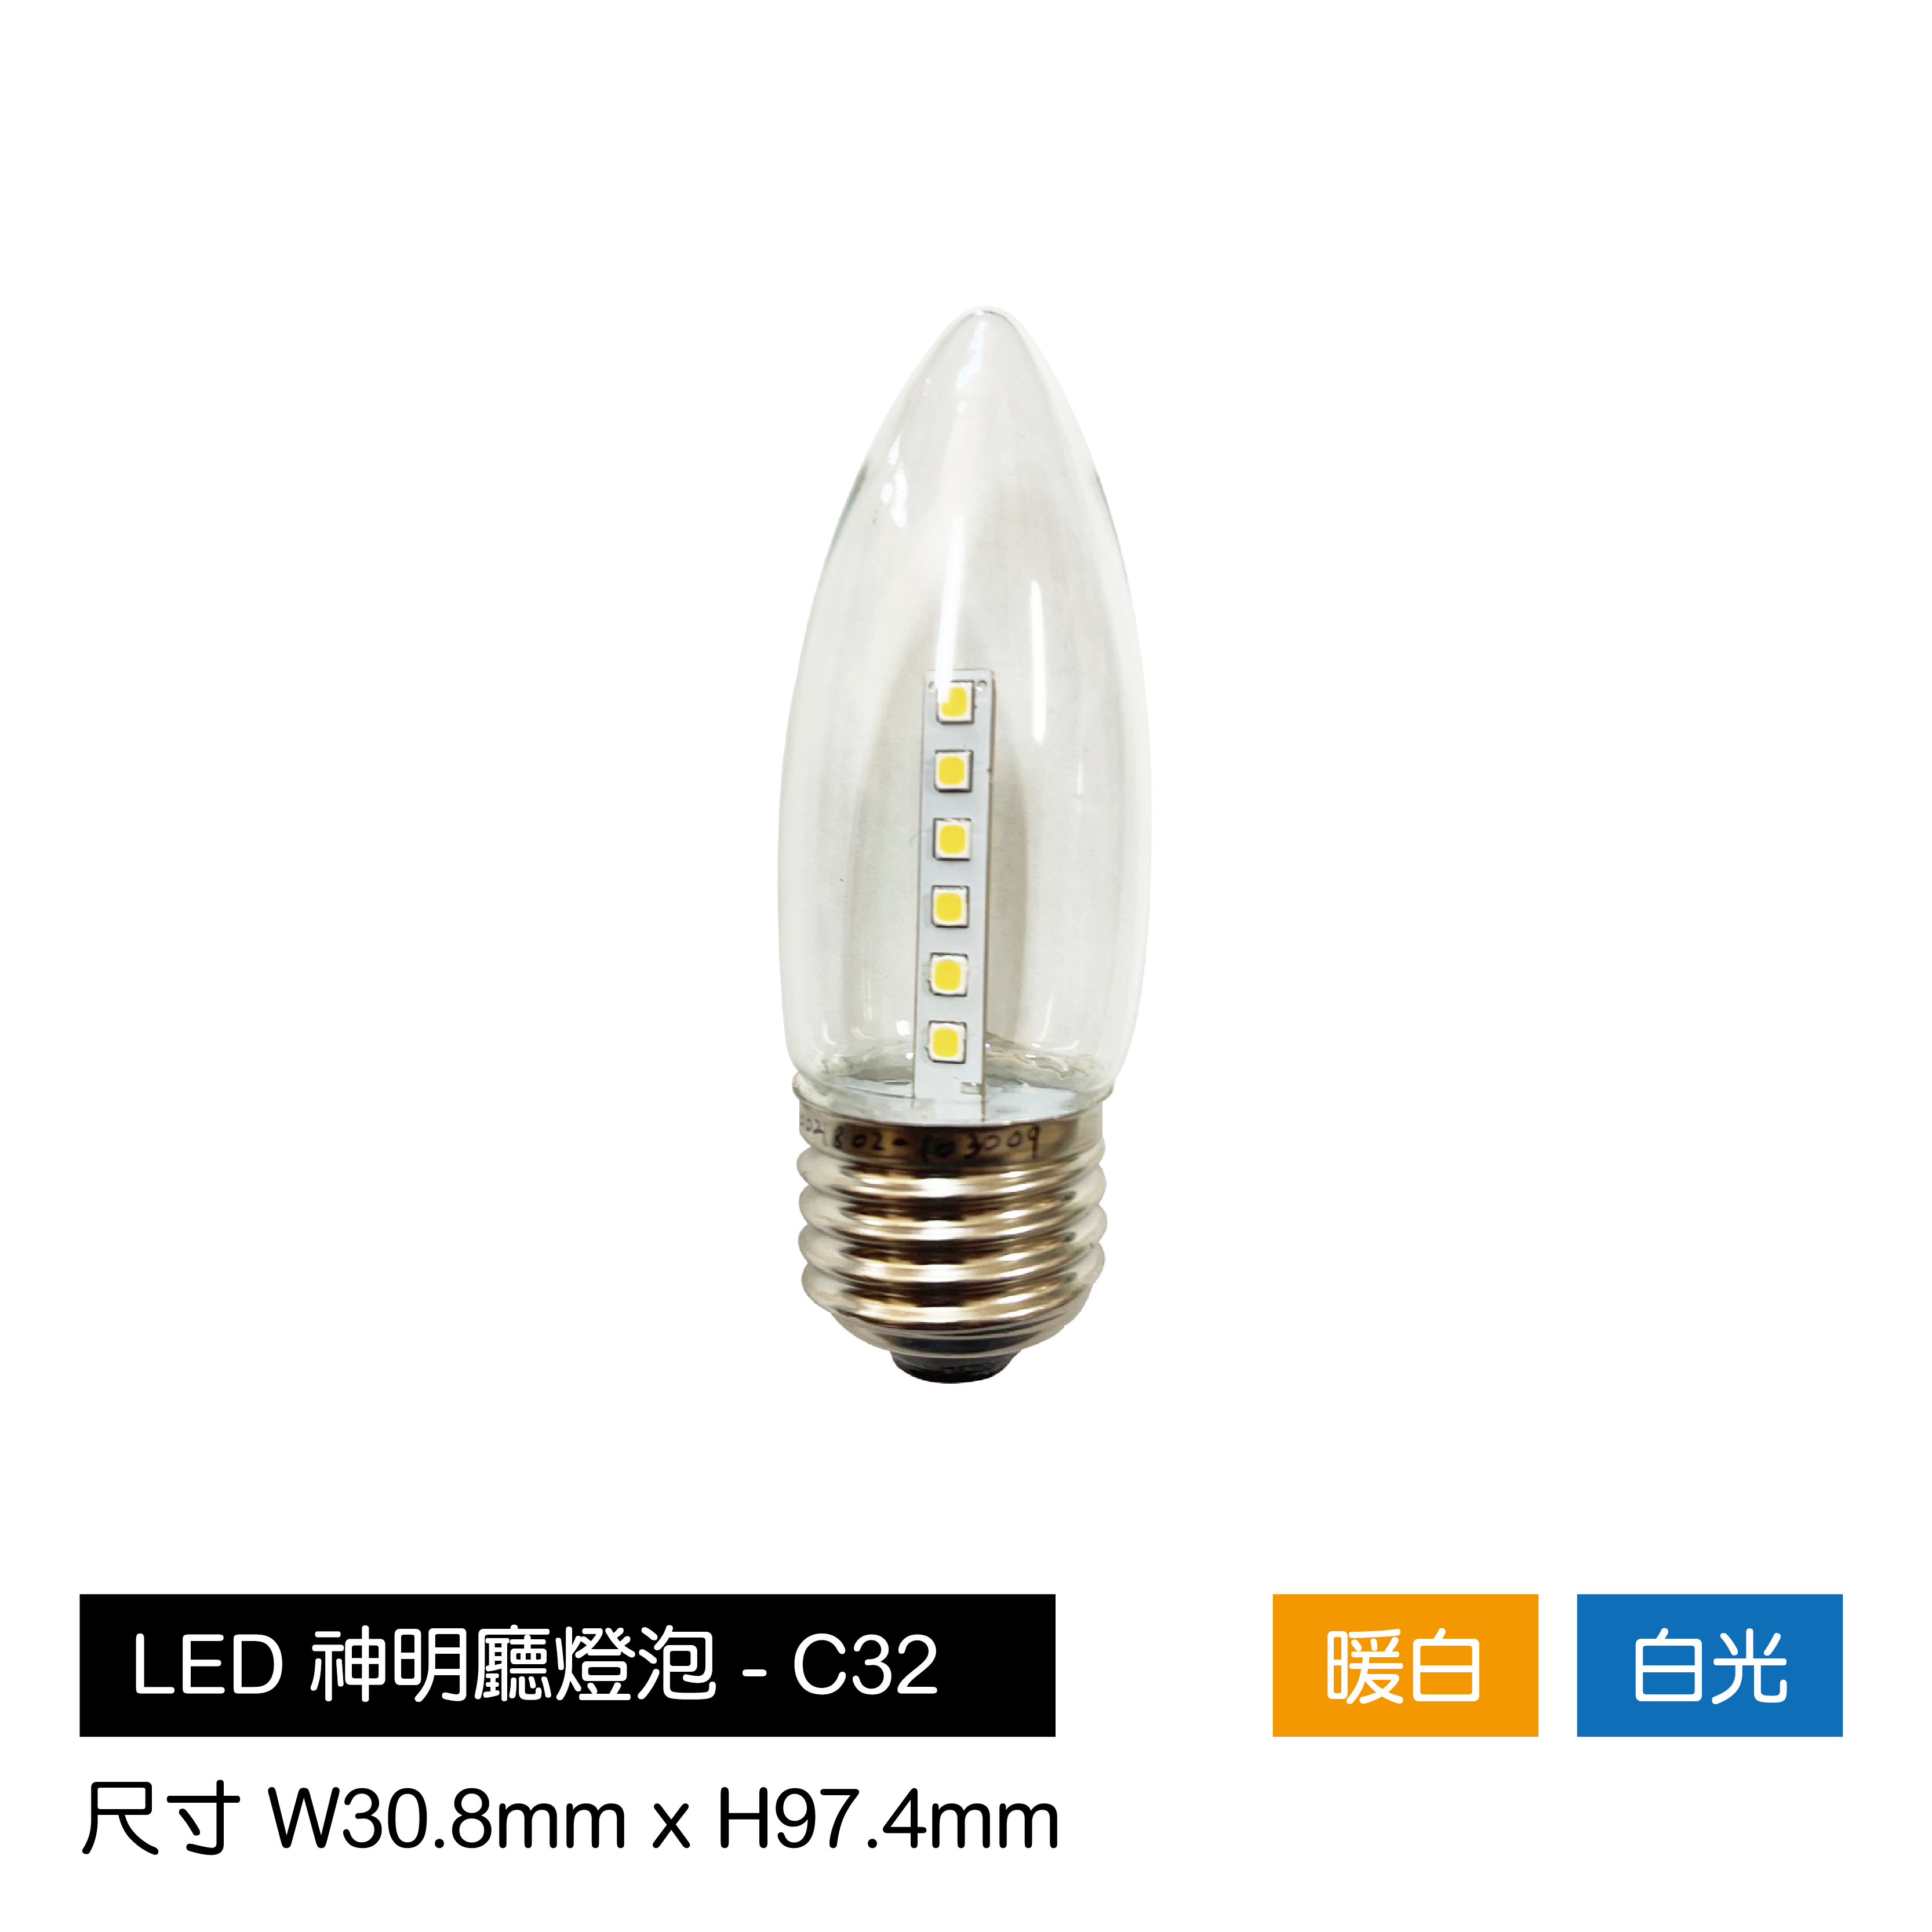 LED-神明廳球泡-C32(暖白/白光)